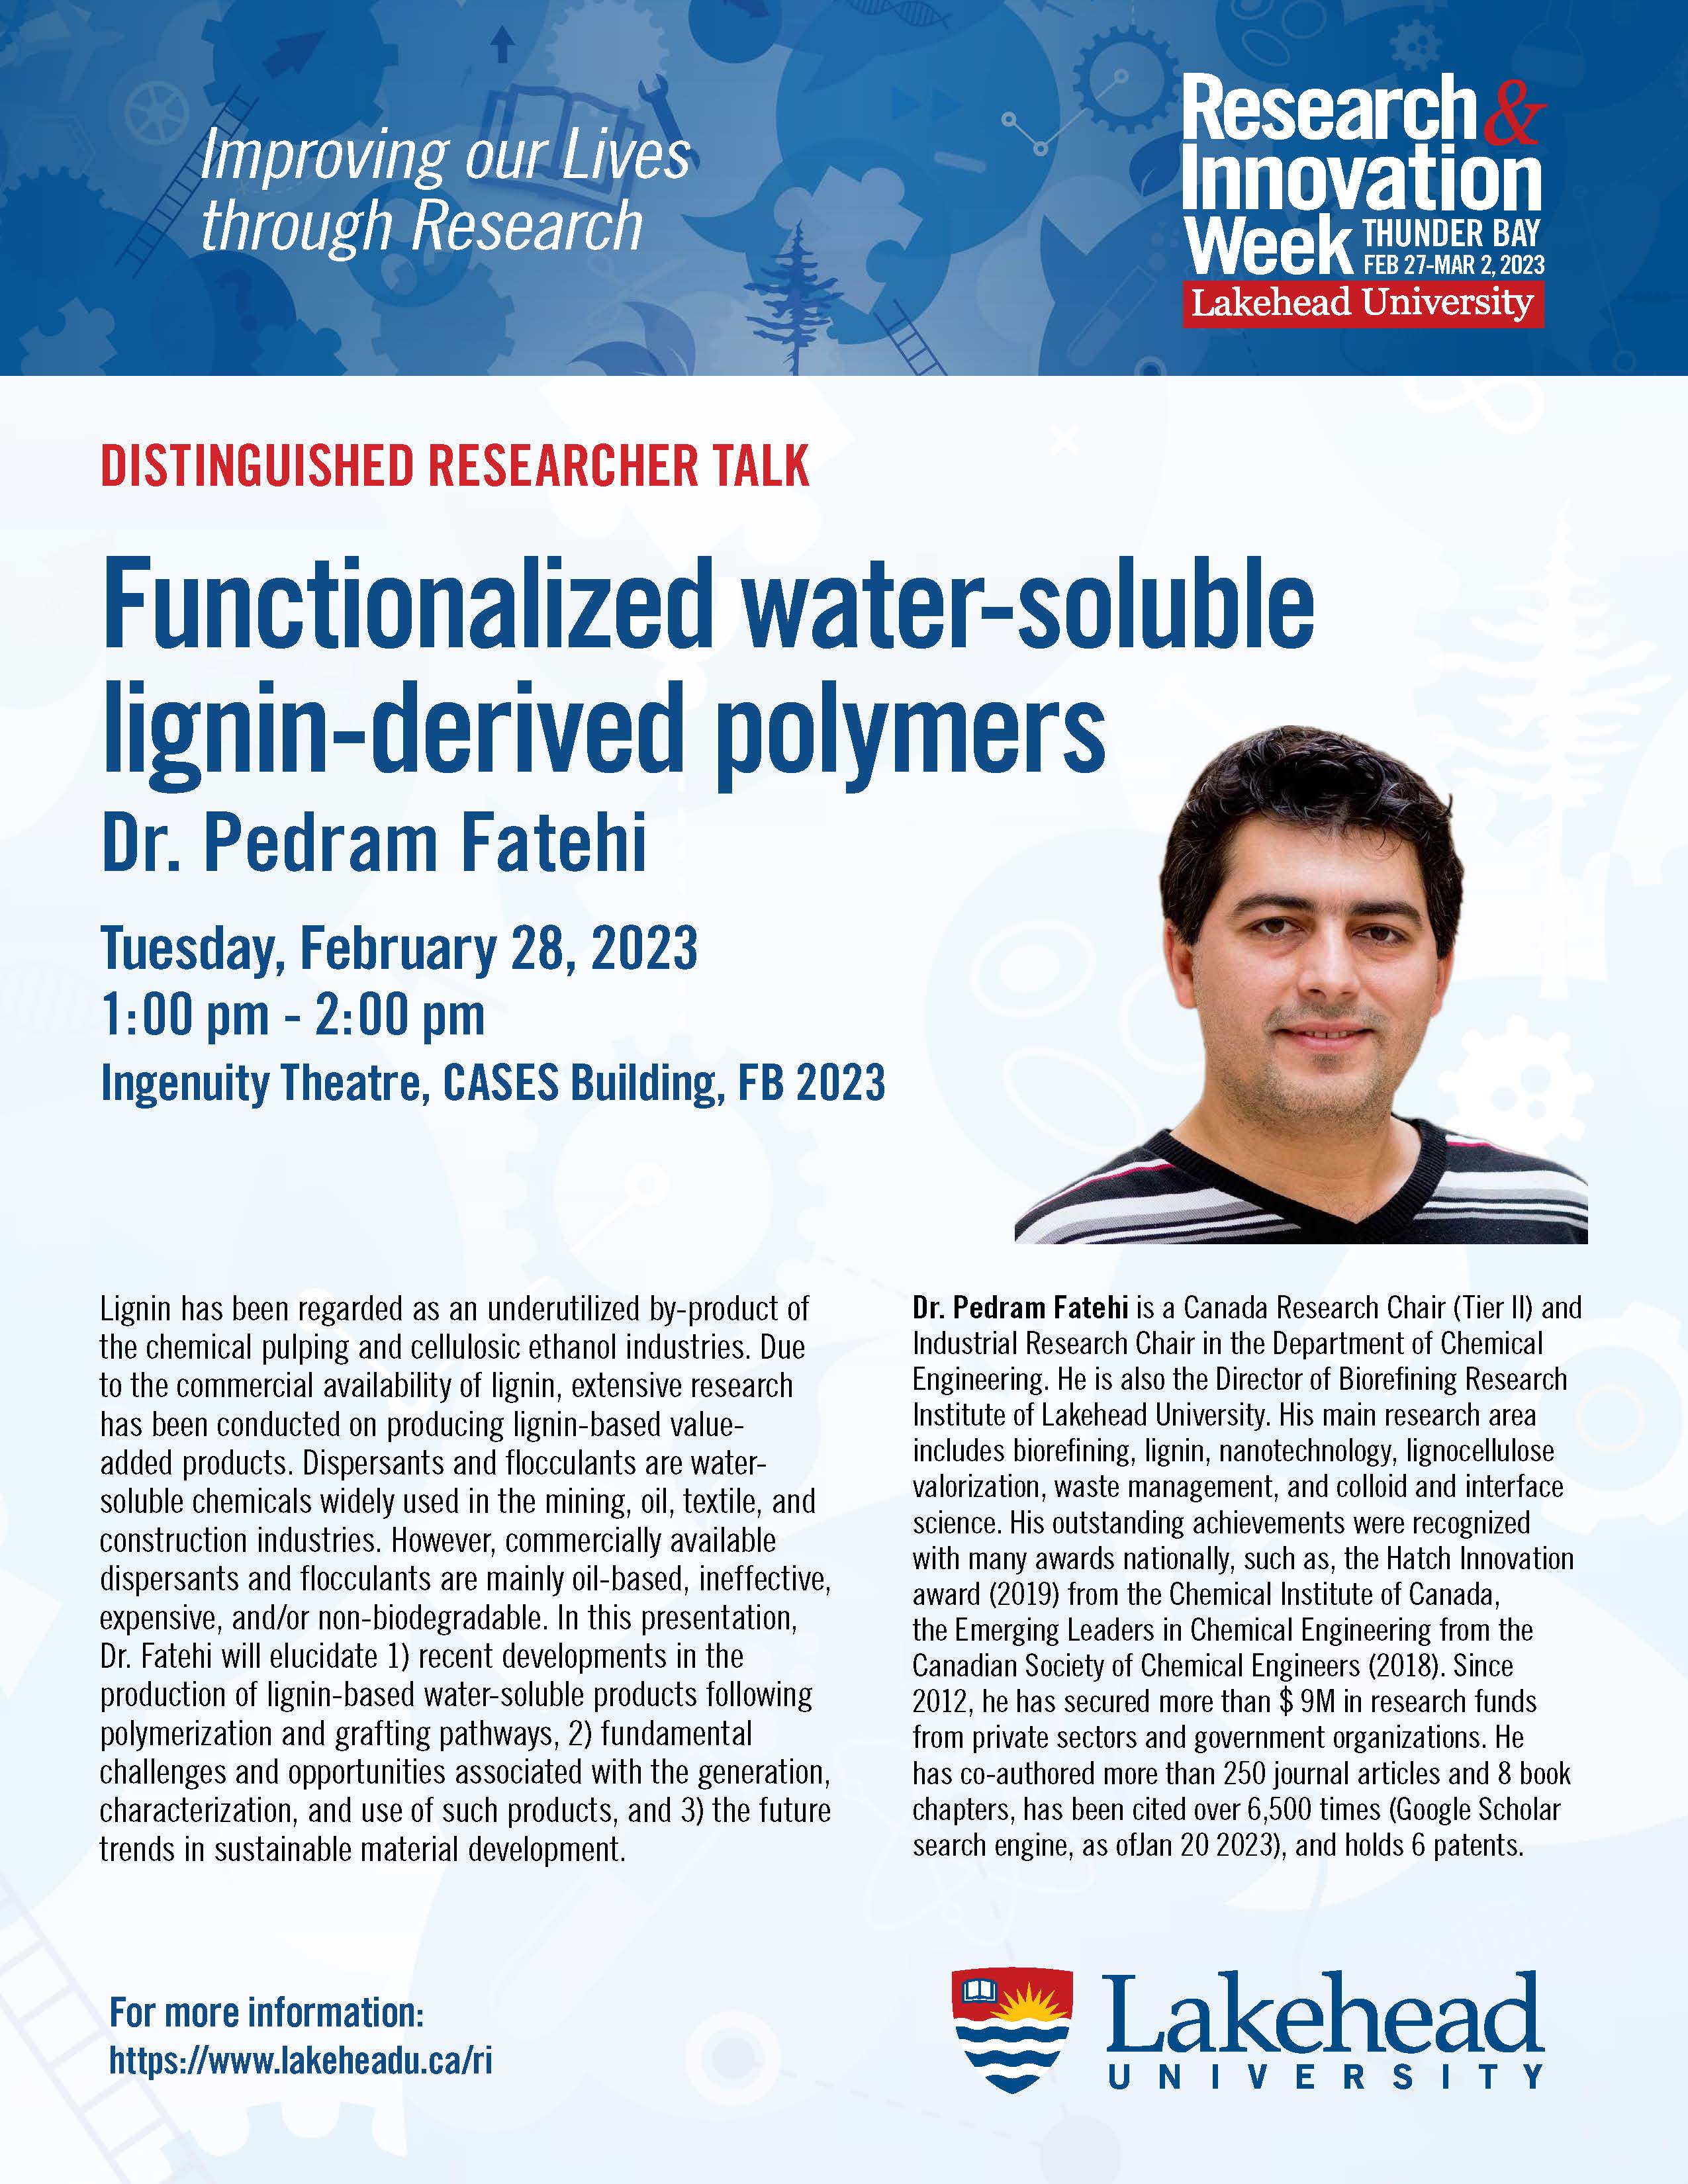 Event Poster Dr. Pedram Fatehi Distinguished Researcher Talk